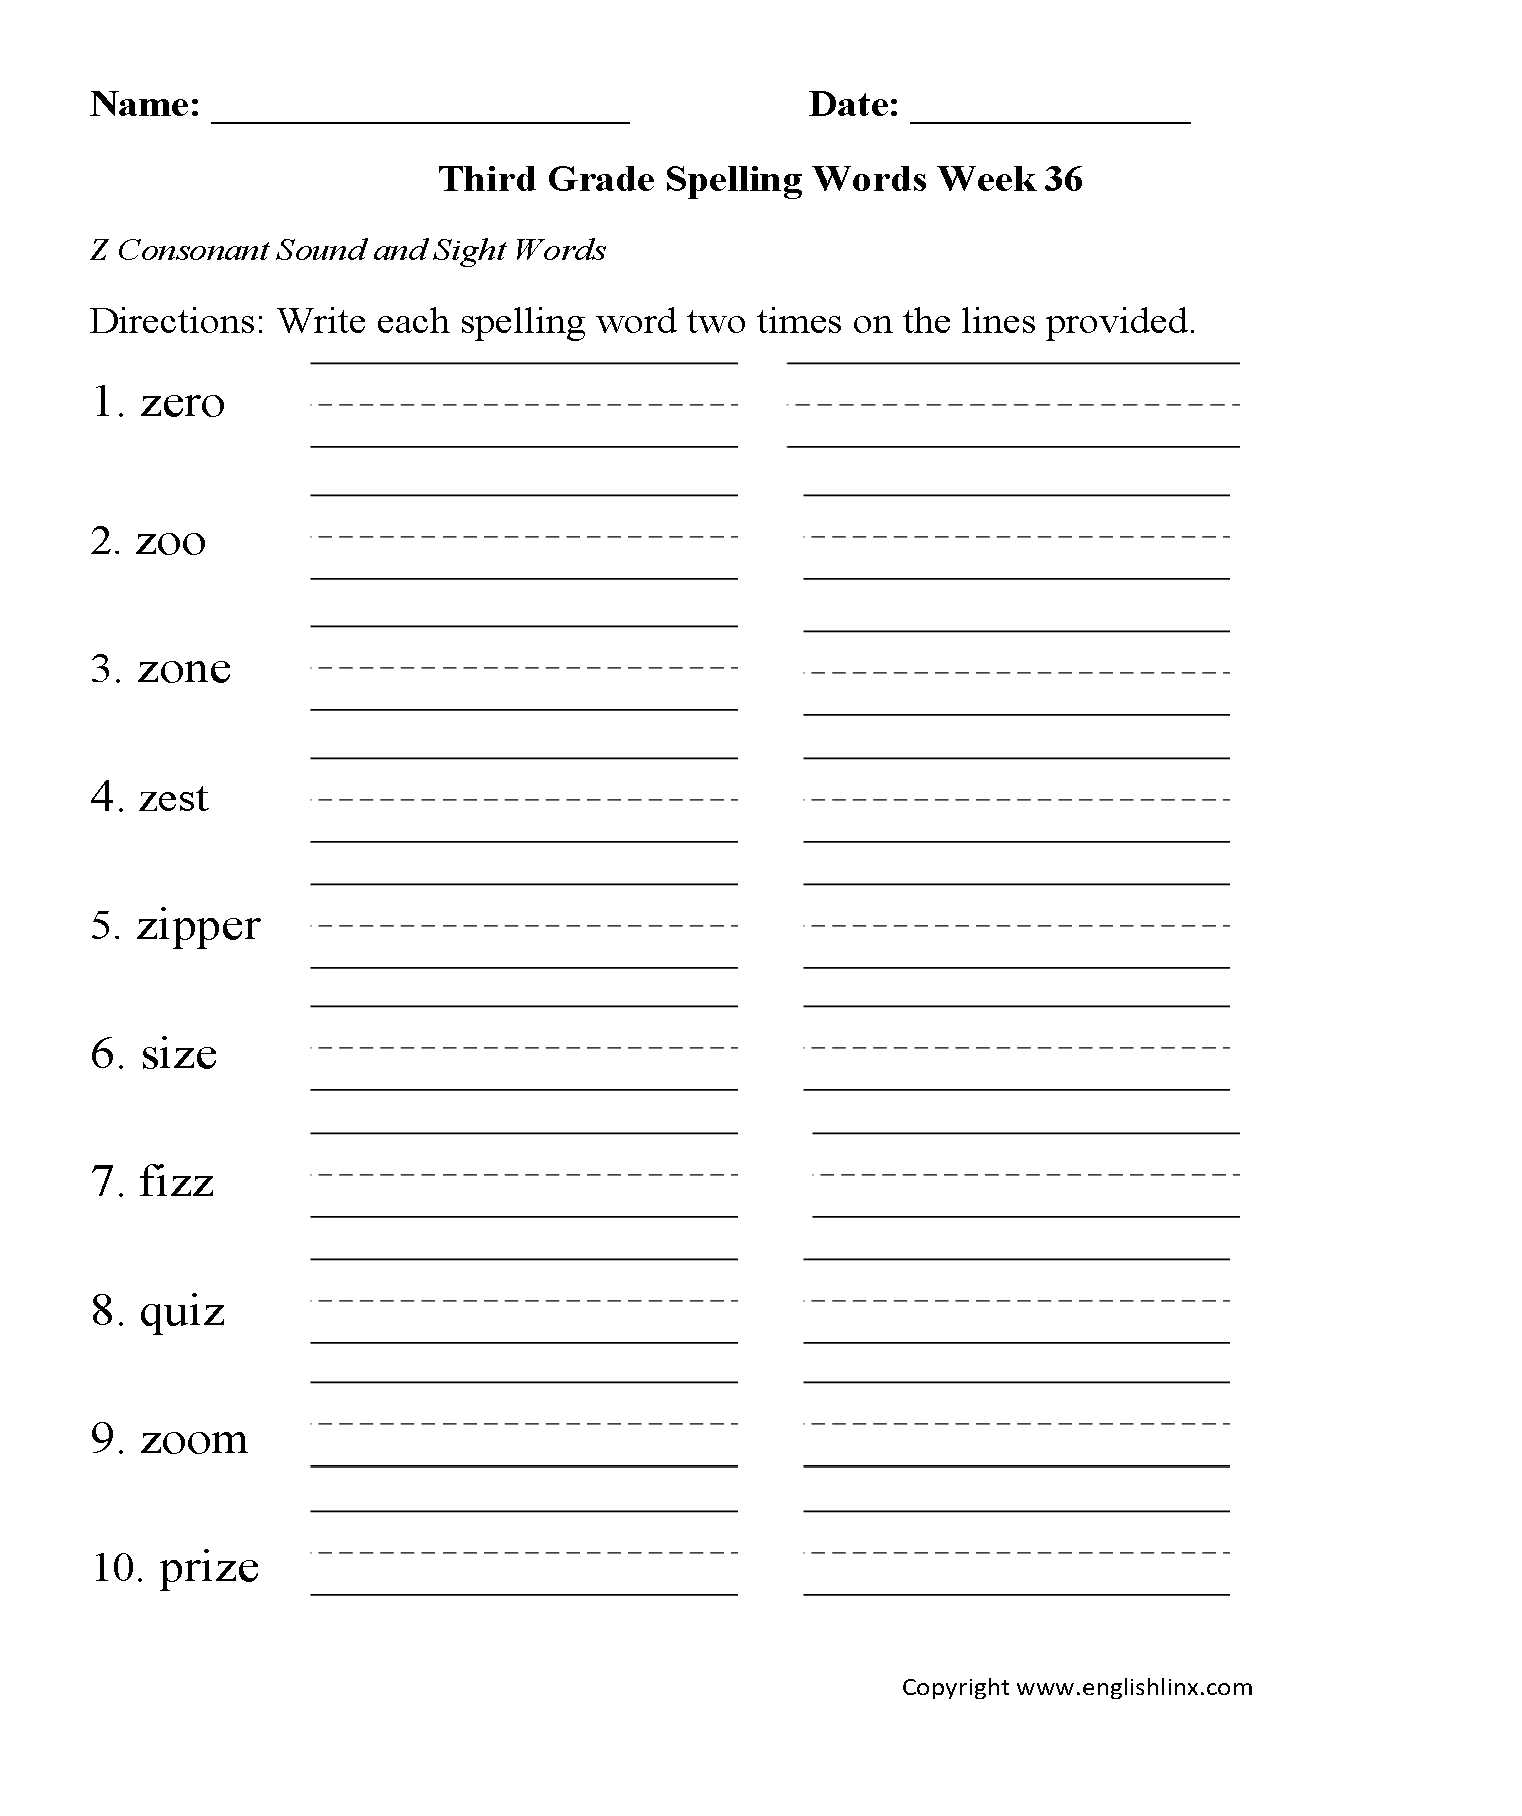 Spelling Worksheets | Third Grade Spelling Worksheets